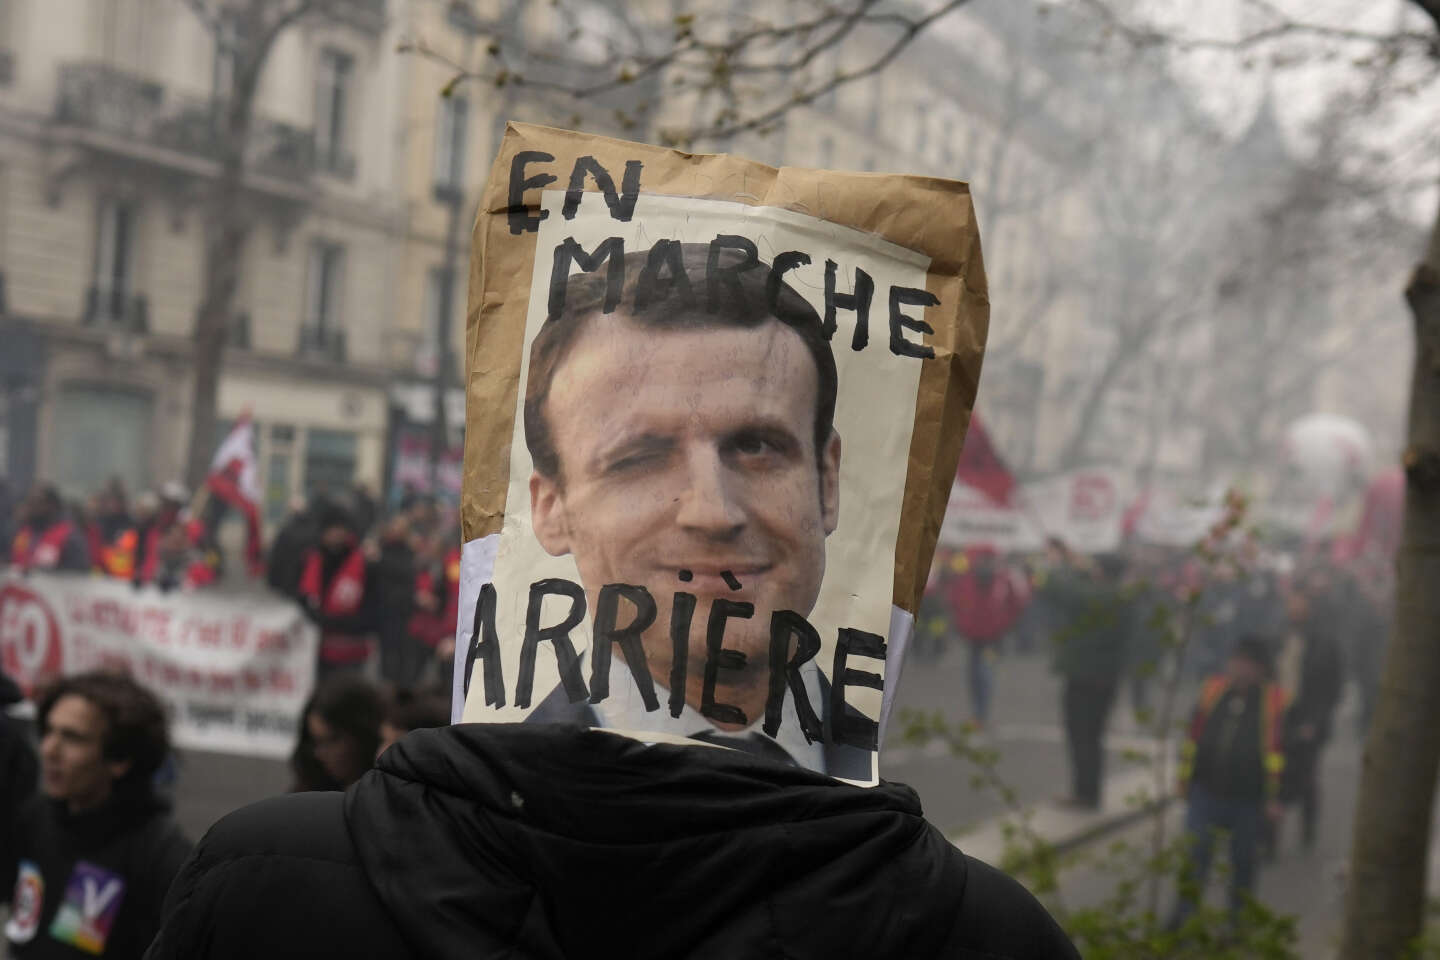 Emmanuel Macron sets himself up as the guarantor of “order” and castigates La France insoumise